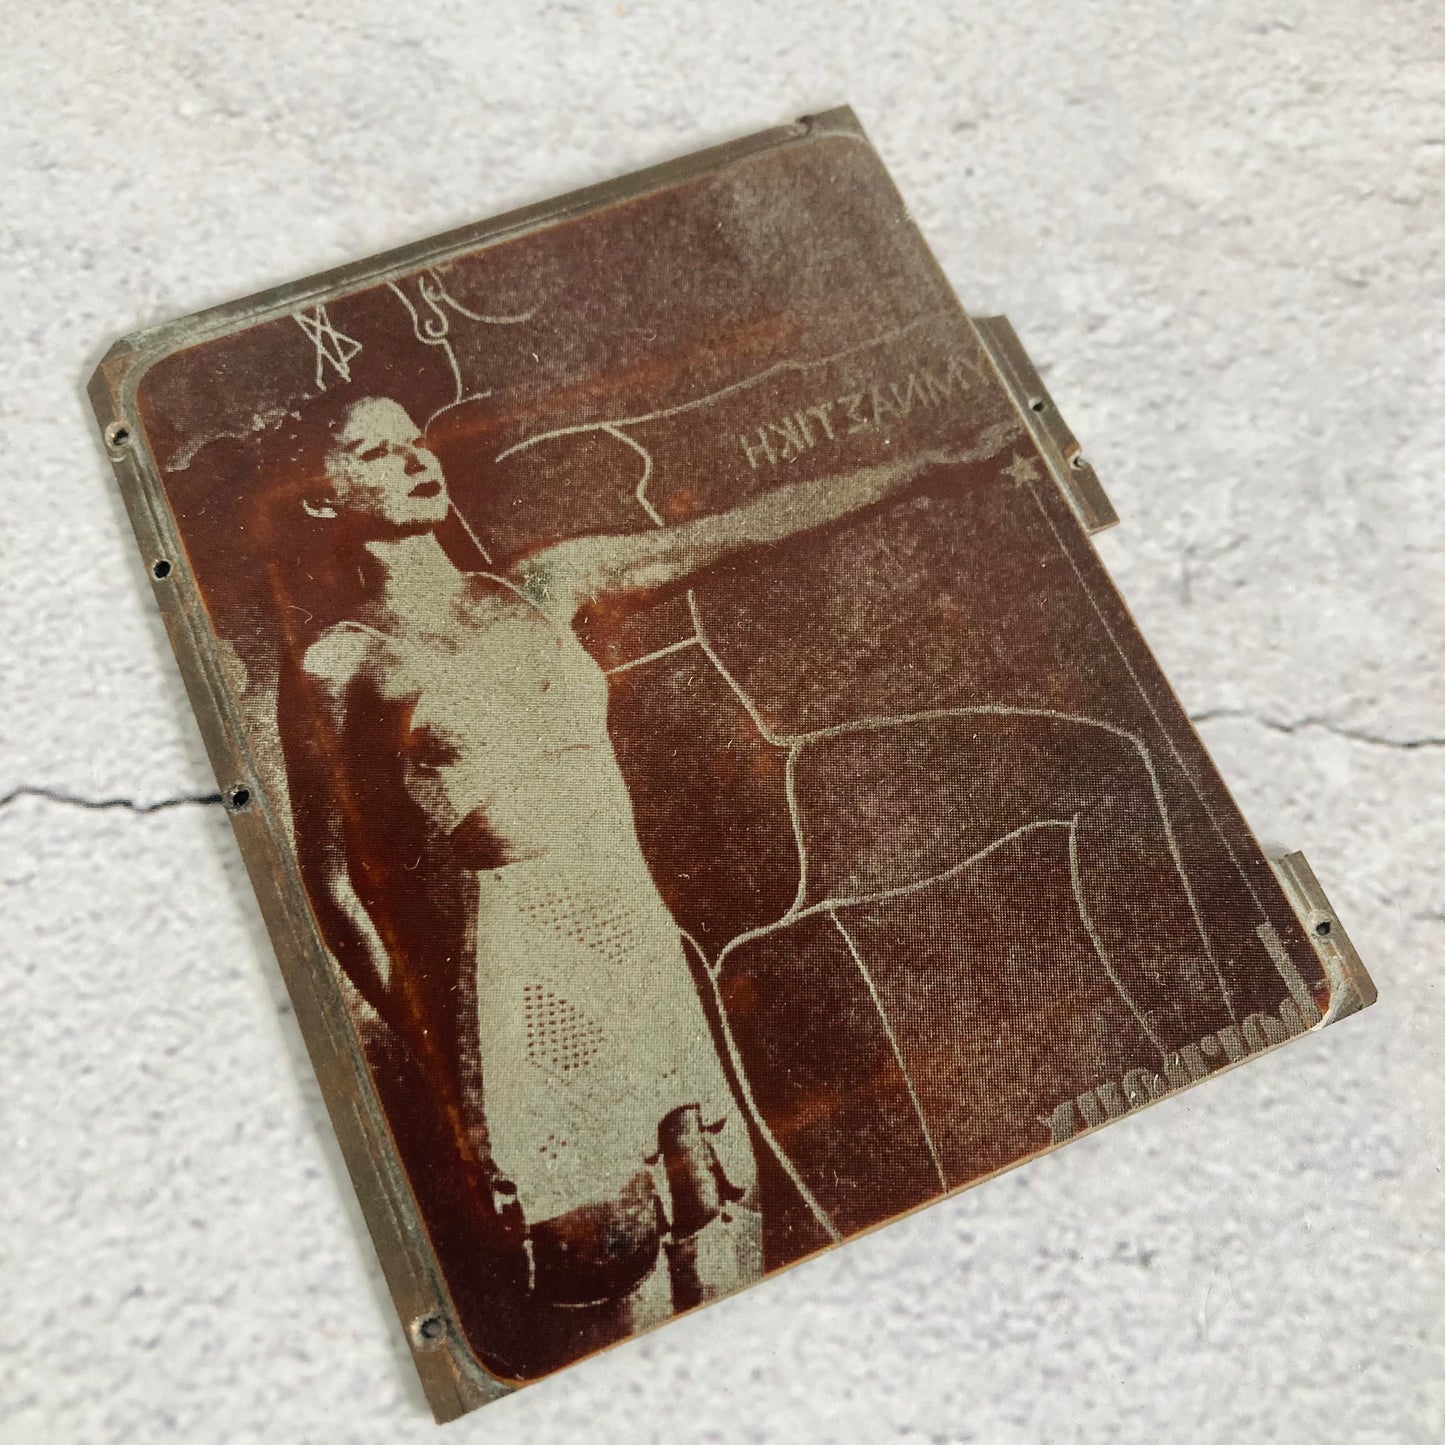 Vintage Erotica Copper Printing Plates | The Urban Vintage Affair